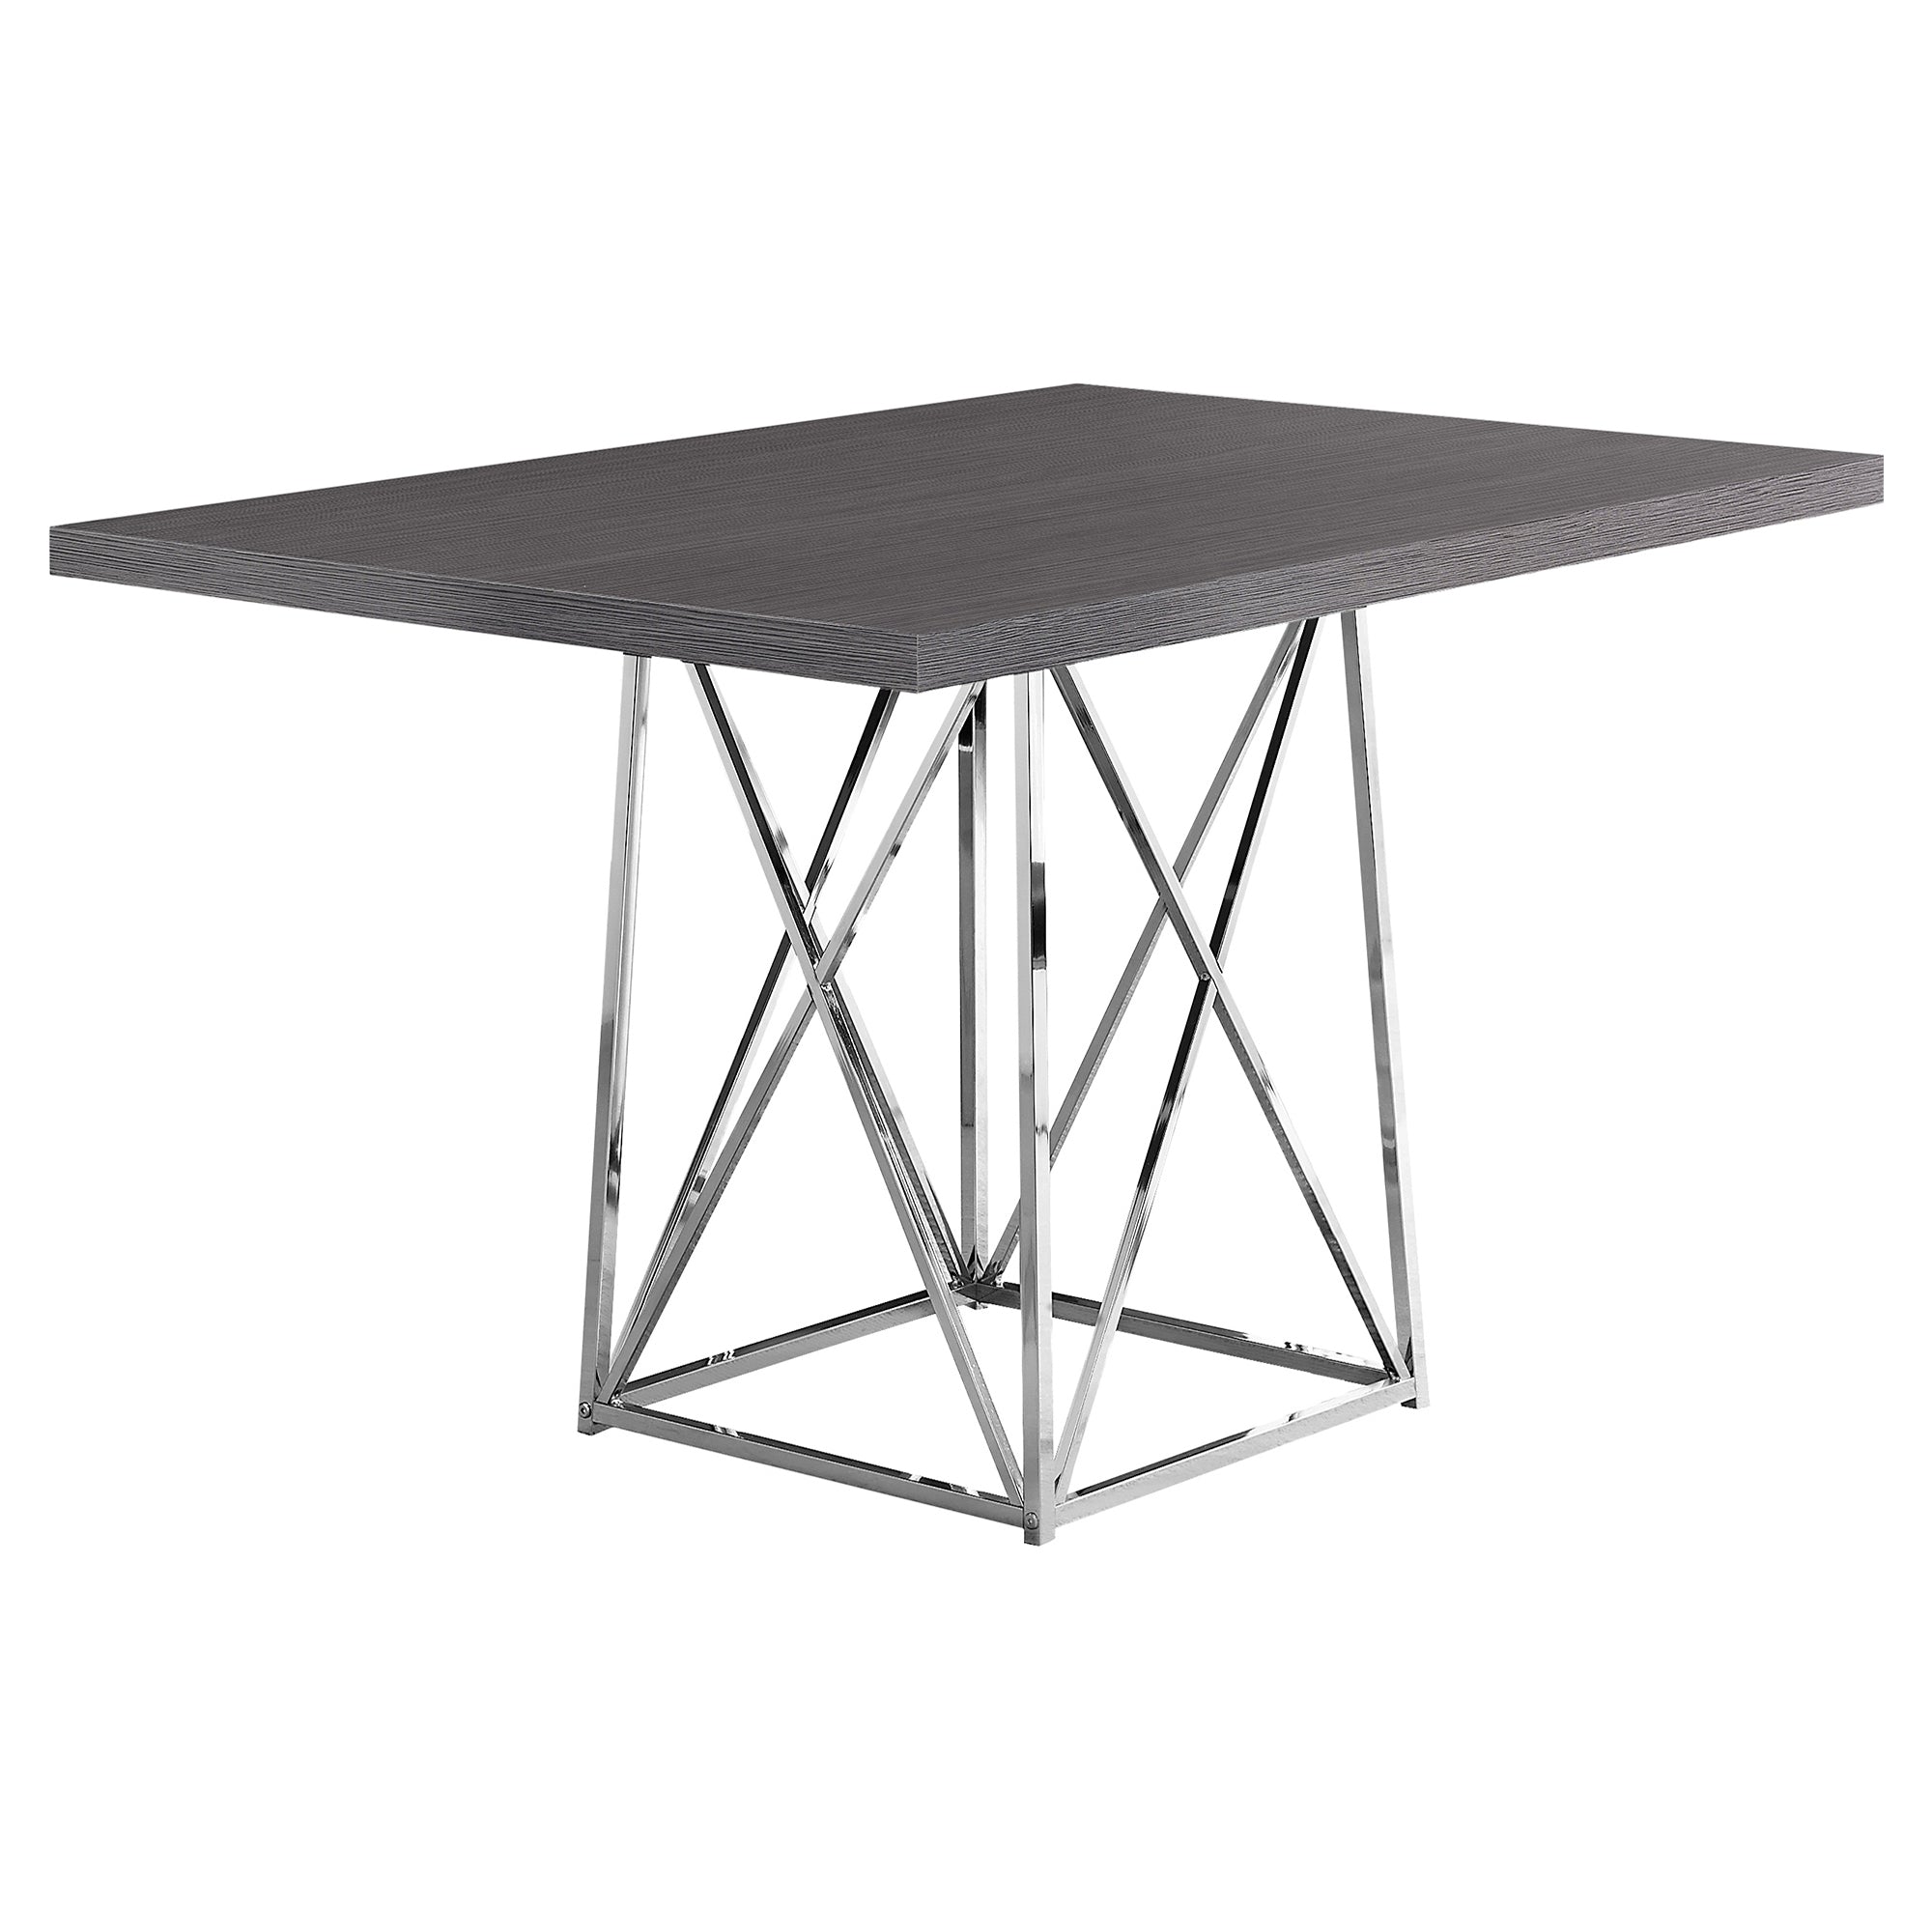 MN-301059    Dining Table, 48" Rectangular, Metal, Kitchen, Dining Room, Metal Base, Laminate, Grey, Chrome, Contemporary, Modern